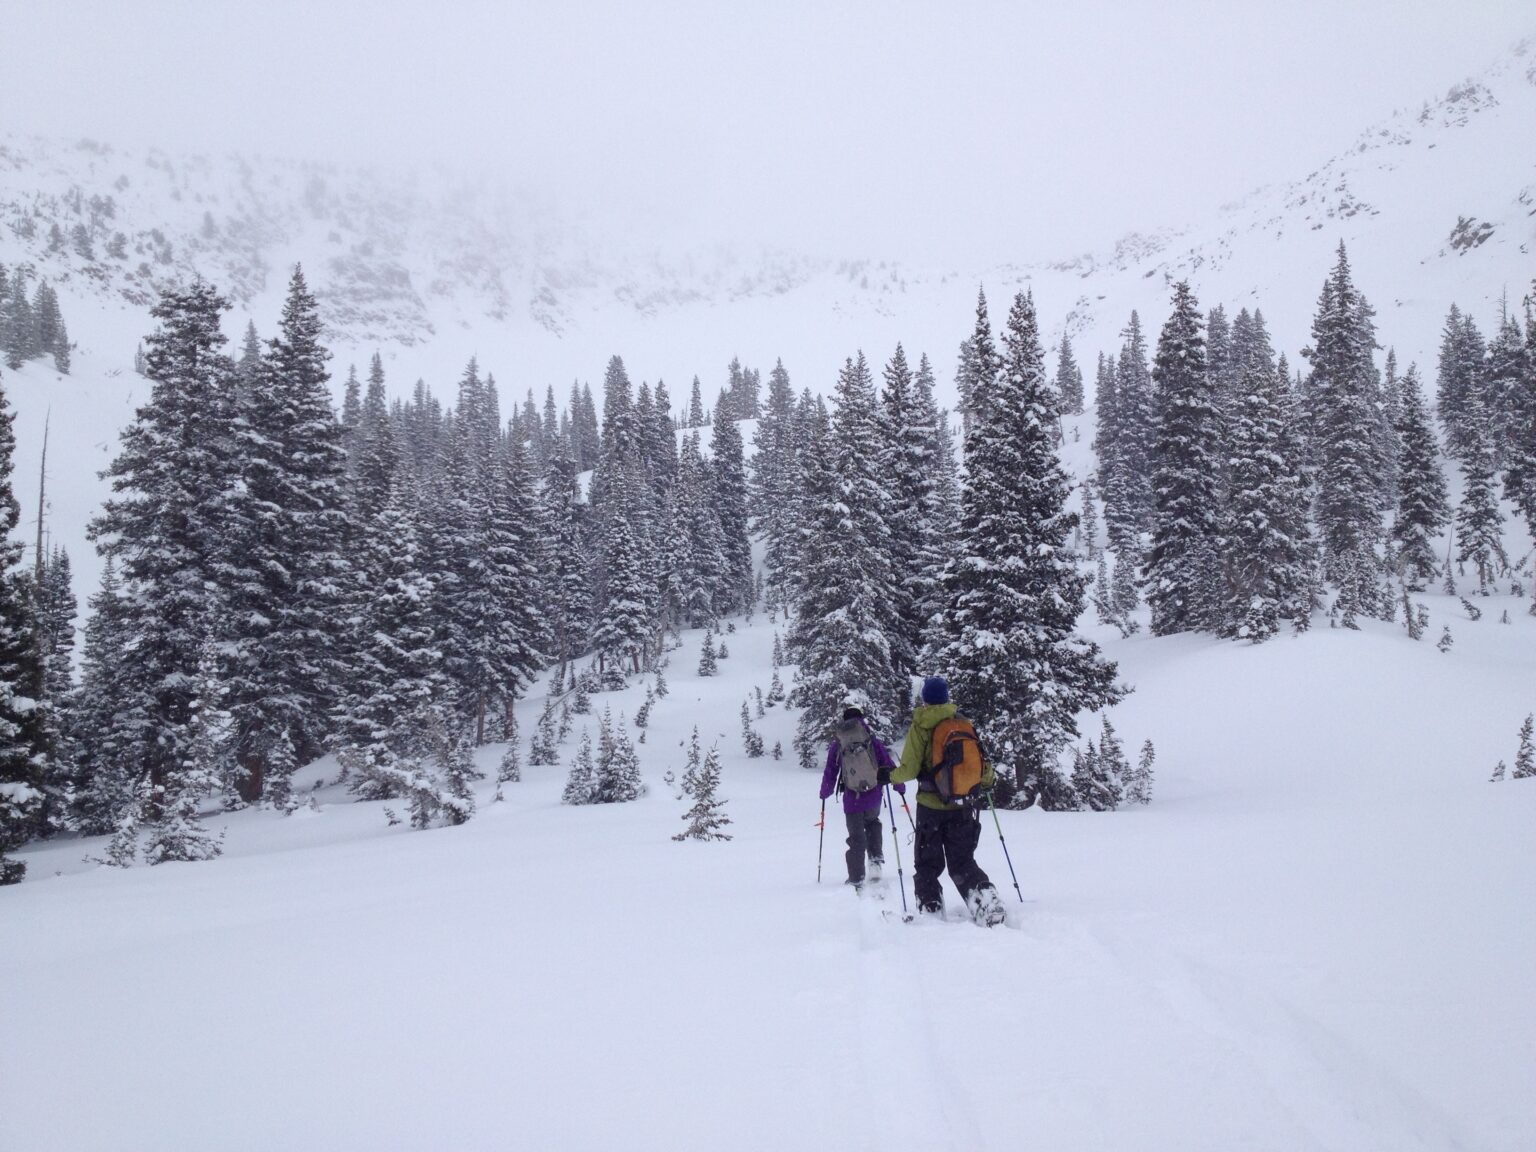 Ski touring across Lake Blanche in Winter